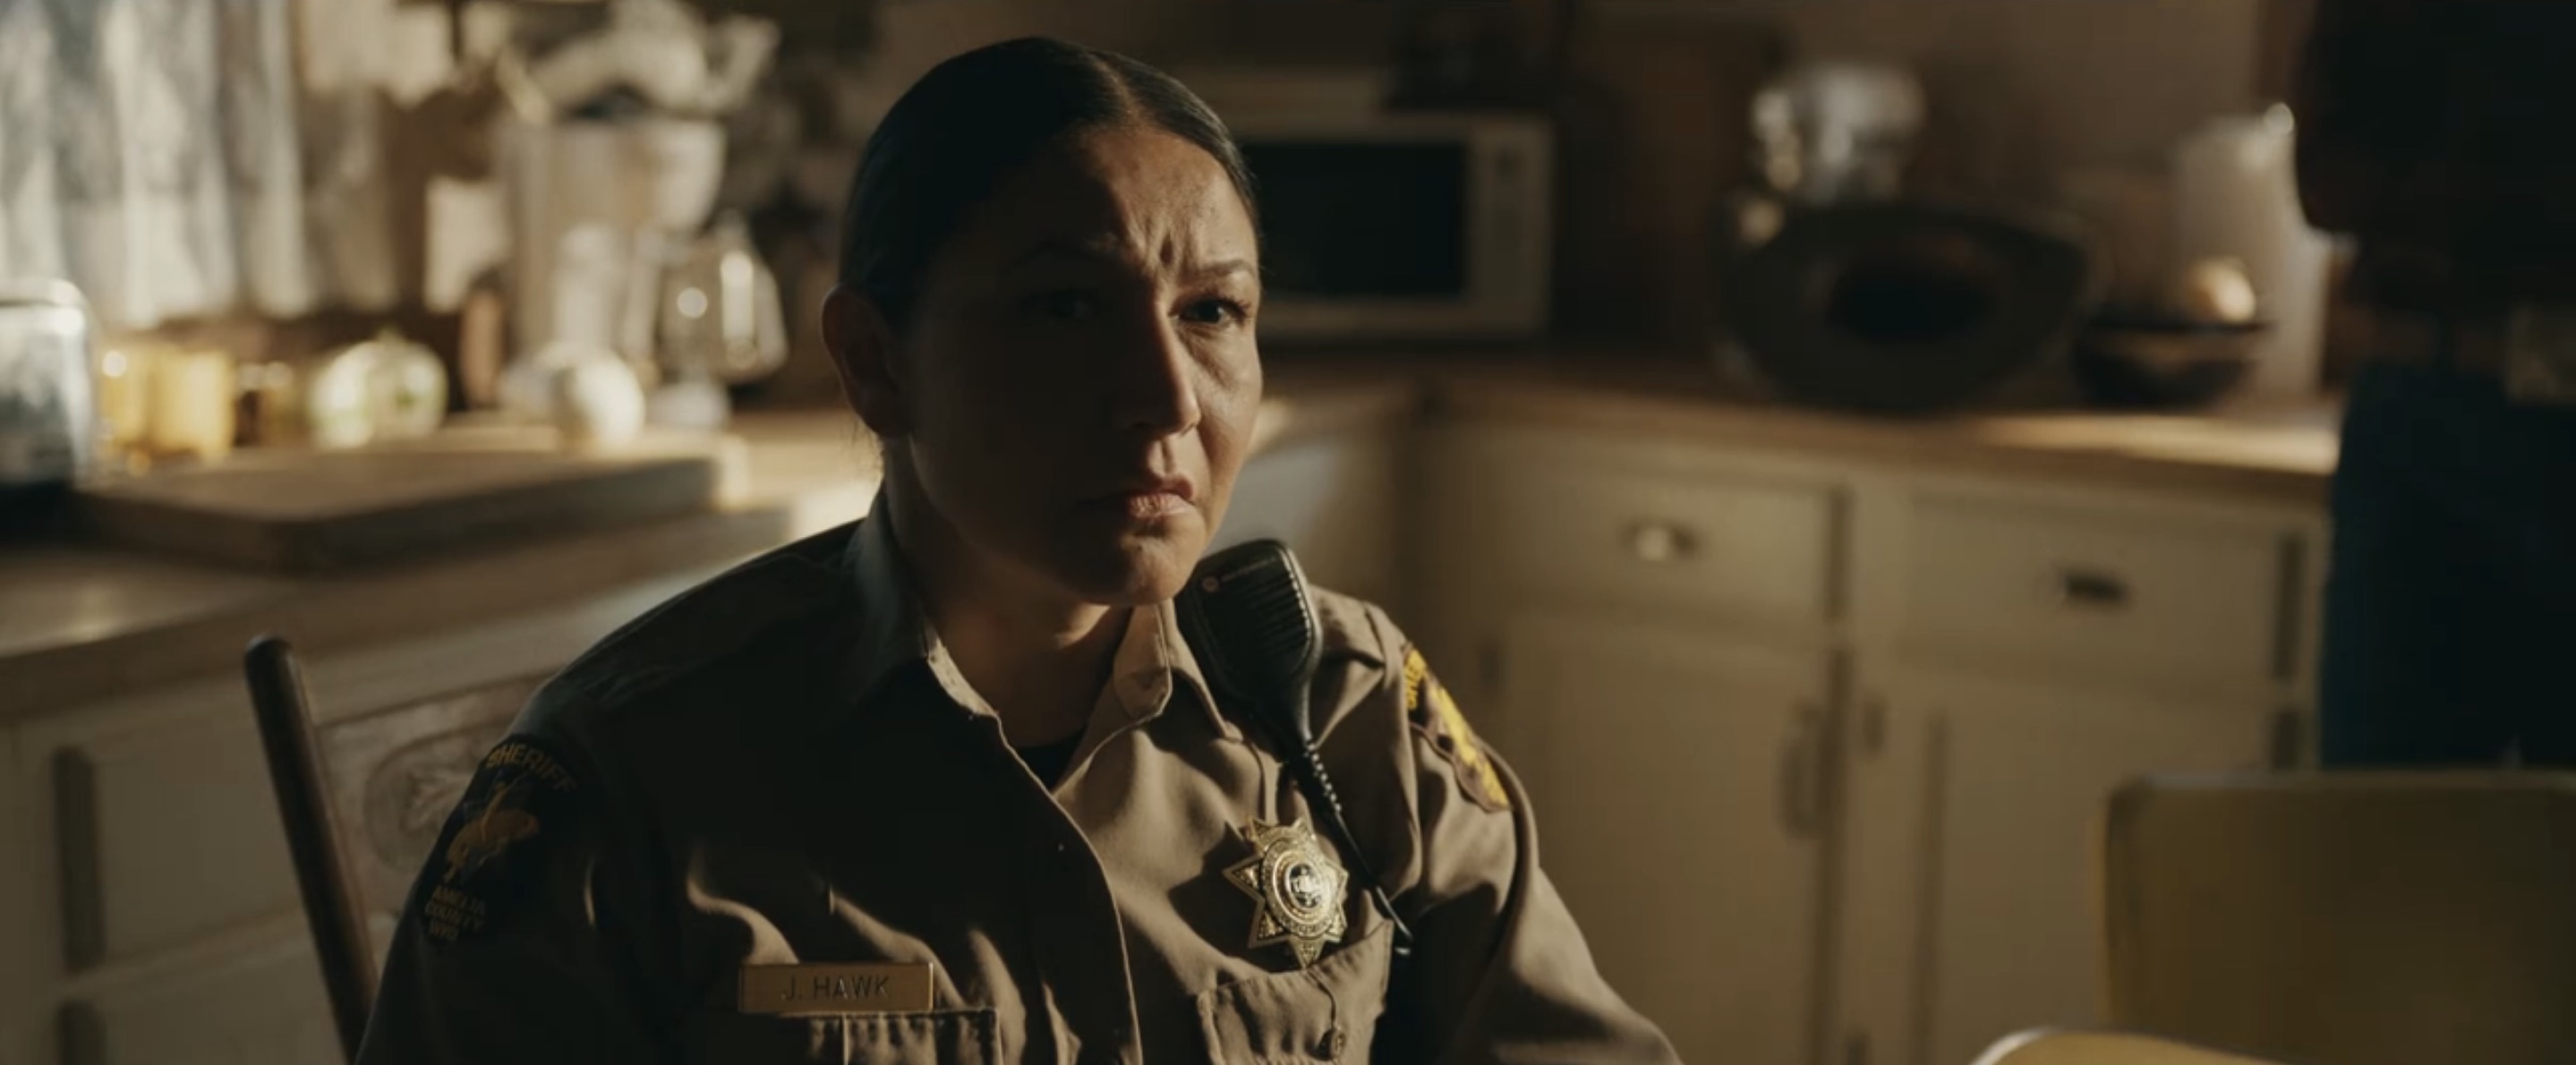 Outer Range Cast - Tamara Podemski as Deputy Sheriff Joy